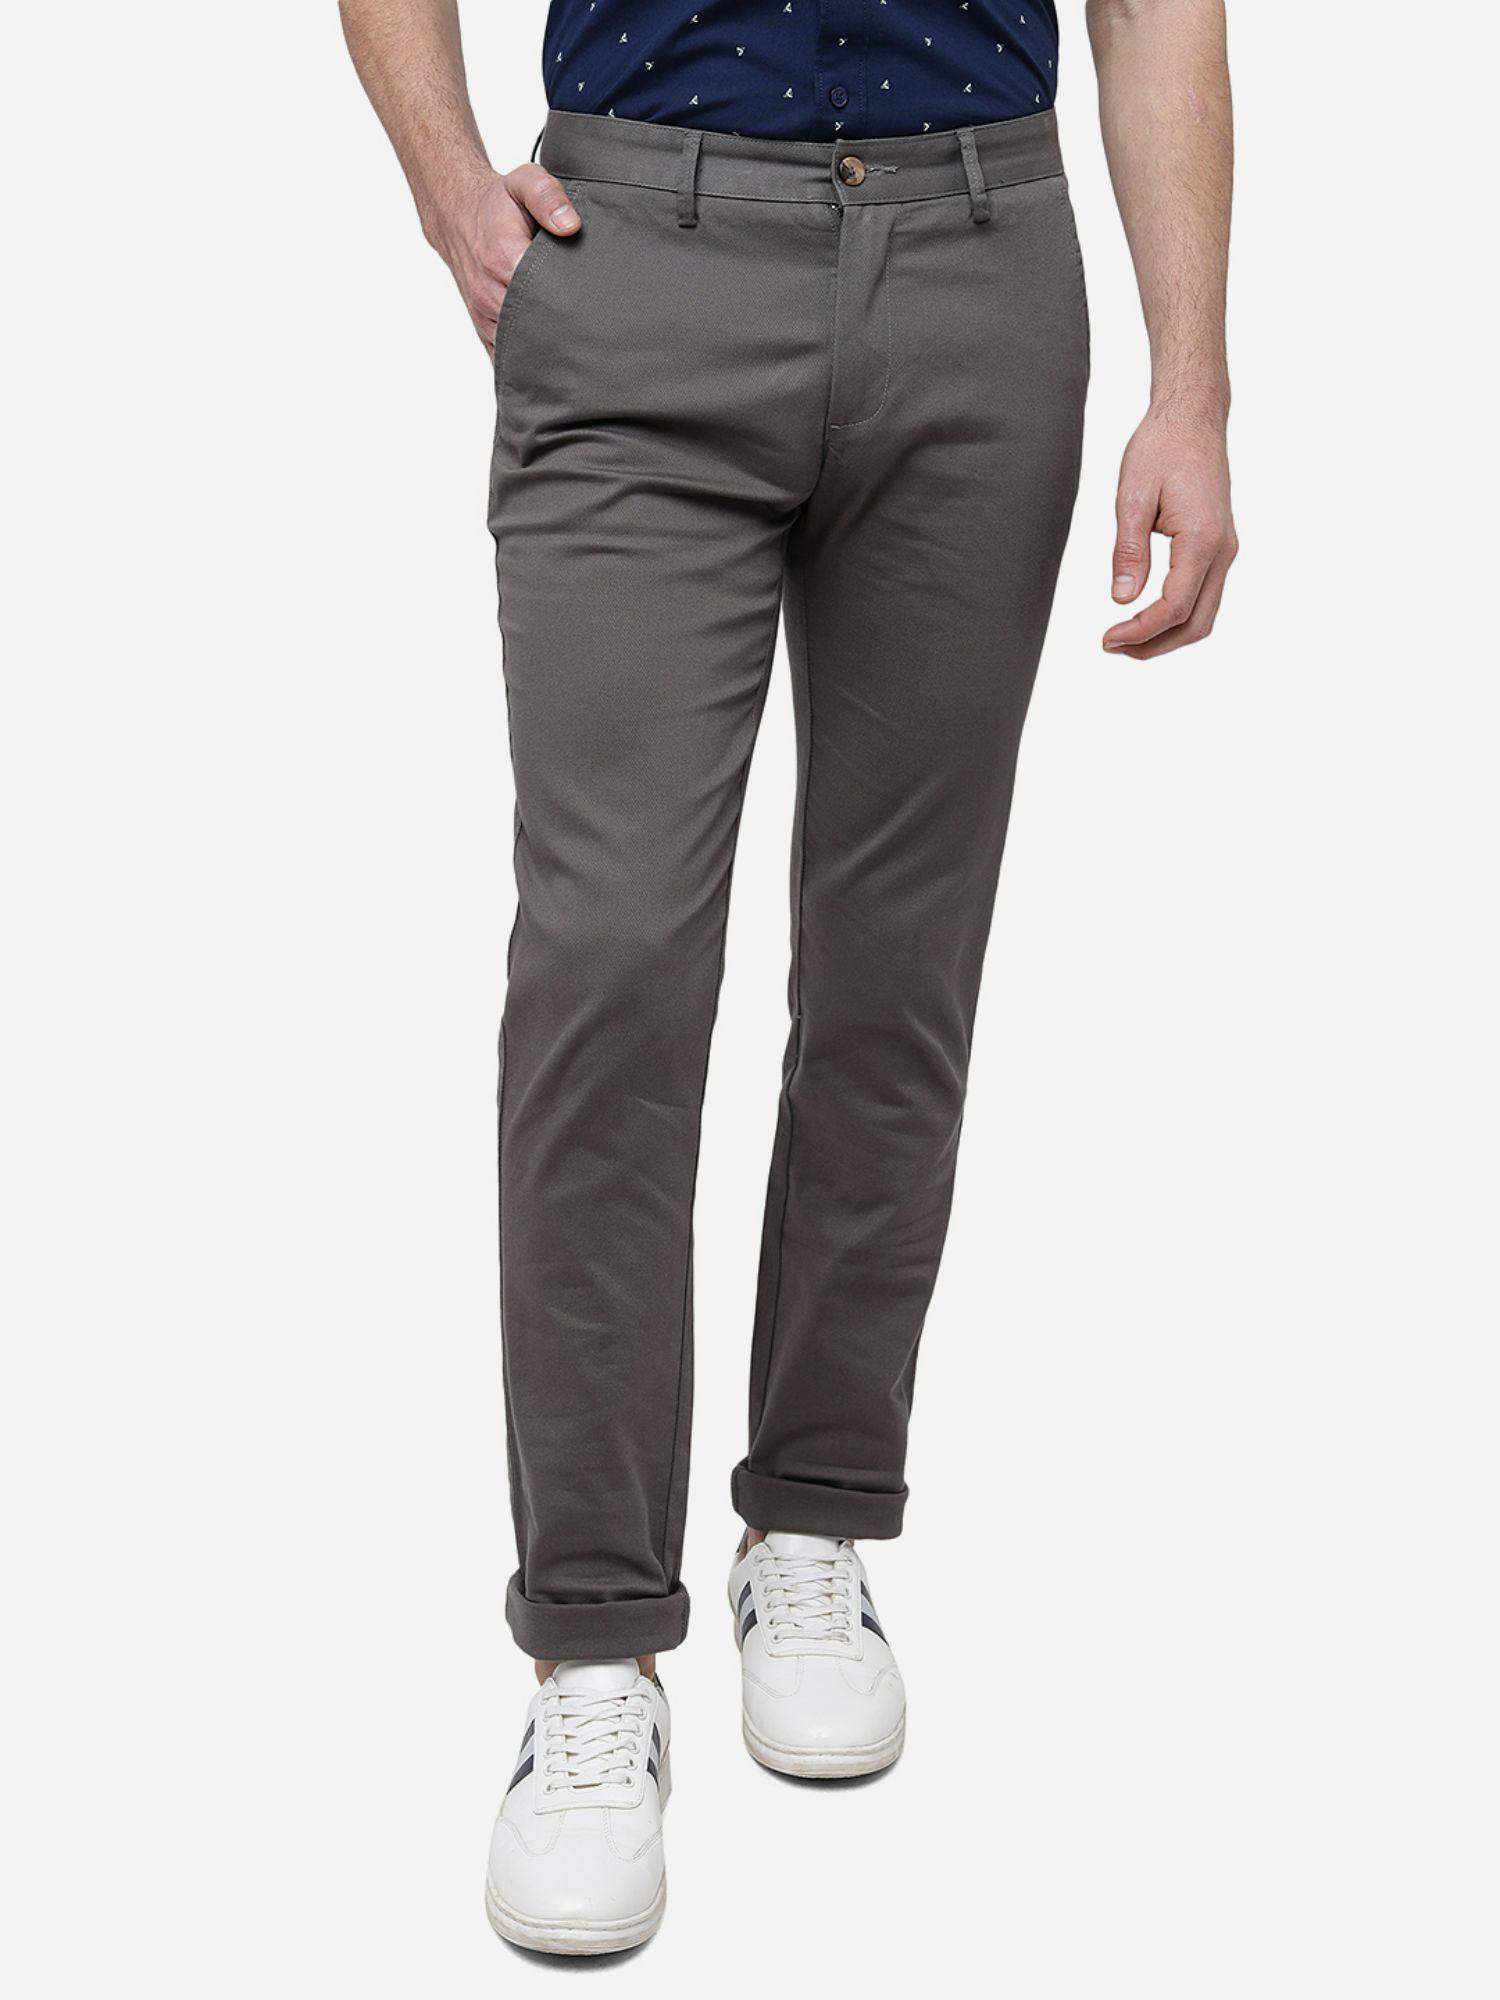 men's solid light grey cotton super slim fit casual trouser